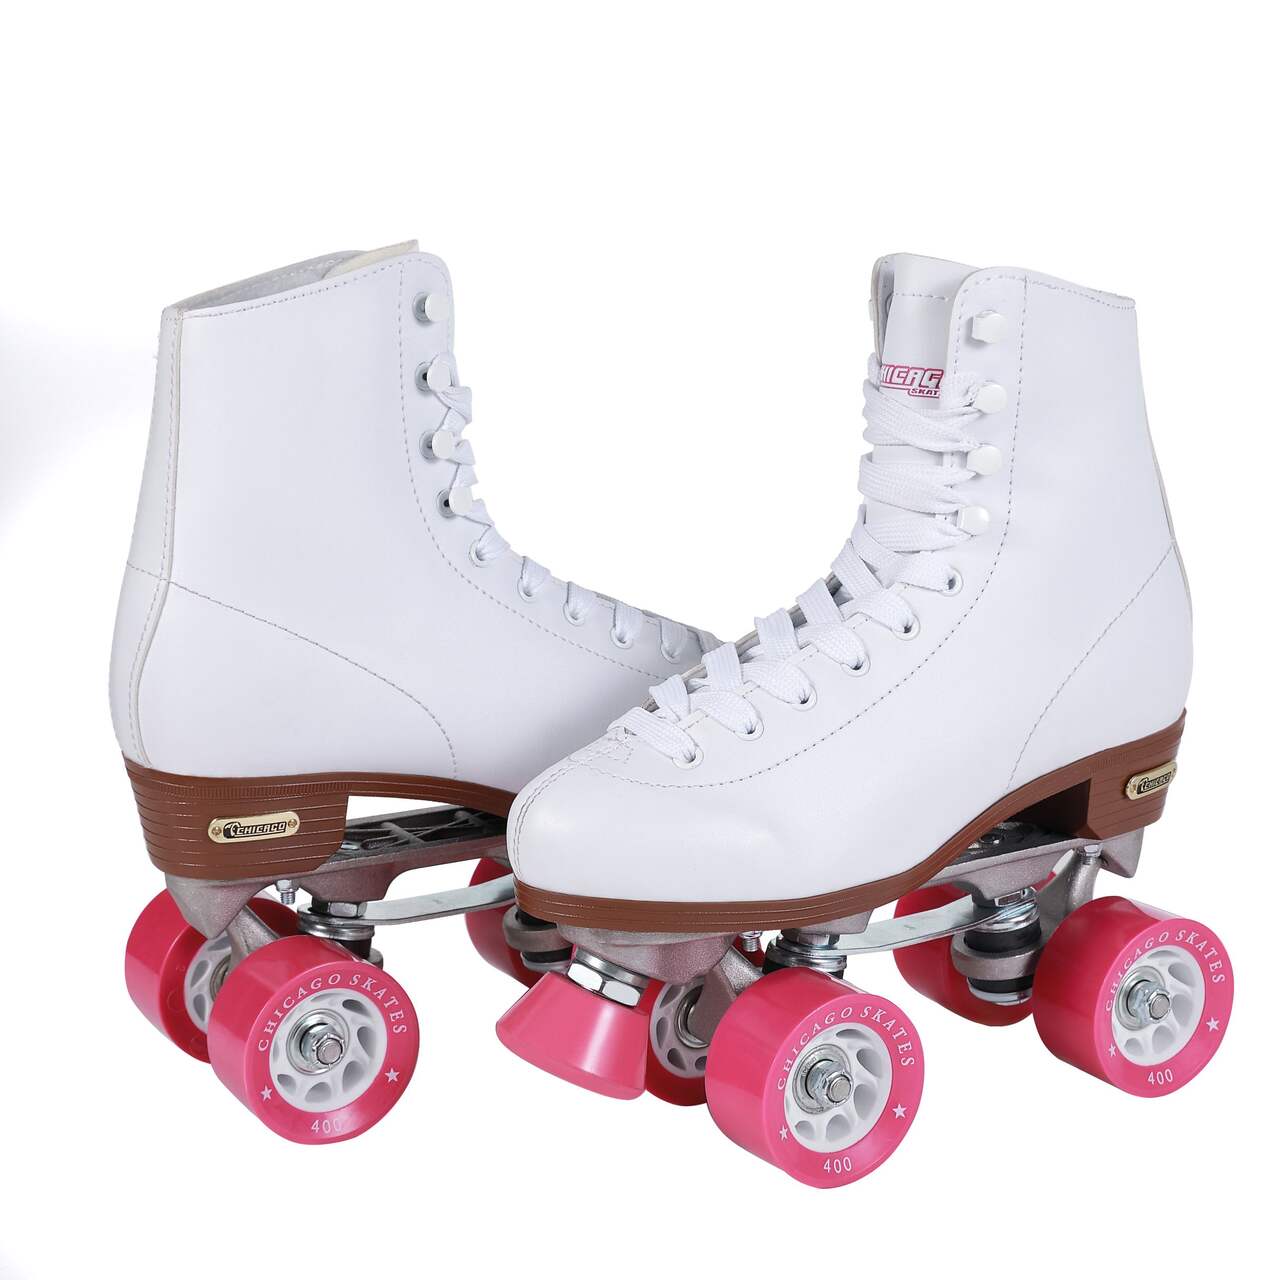 Ultra Wheels Basic Inline Skate Pad Set, Assorted Sizes